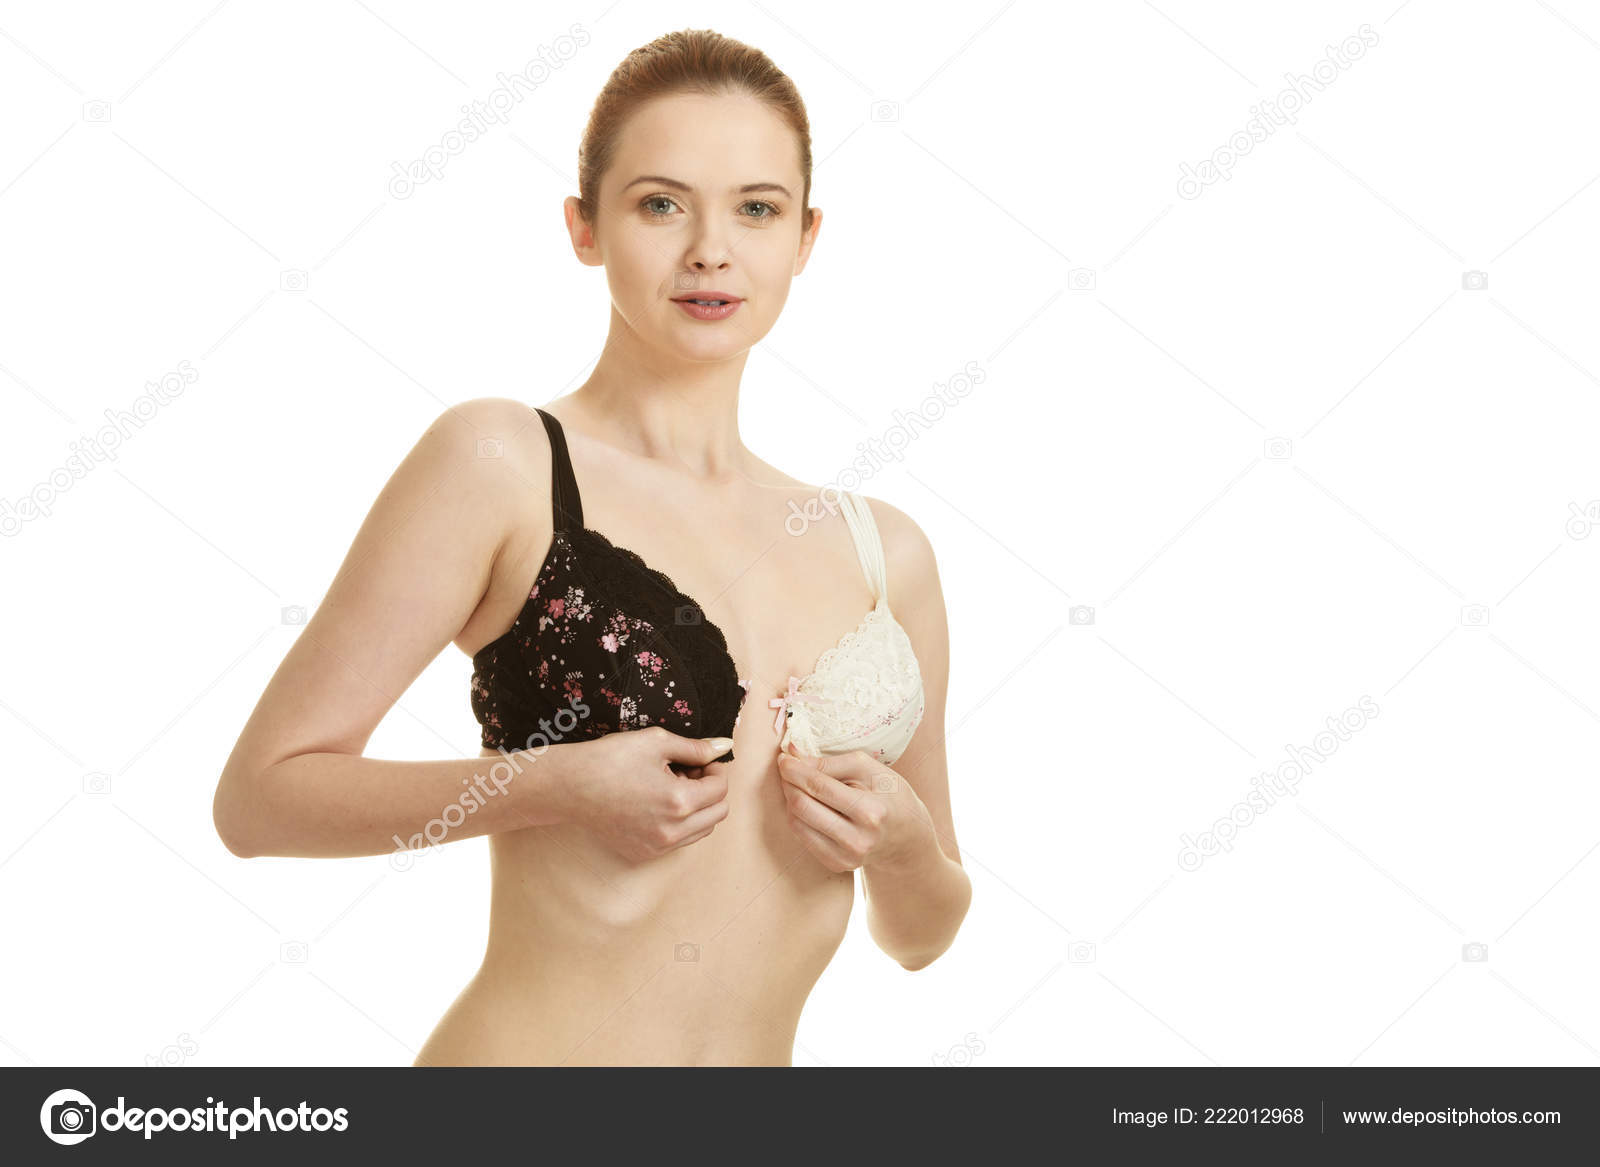 https://st4.depositphotos.com/1178490/22201/i/1600/depositphotos_222012968-stock-photo-female-dilemmas-black-white-underwear.jpg